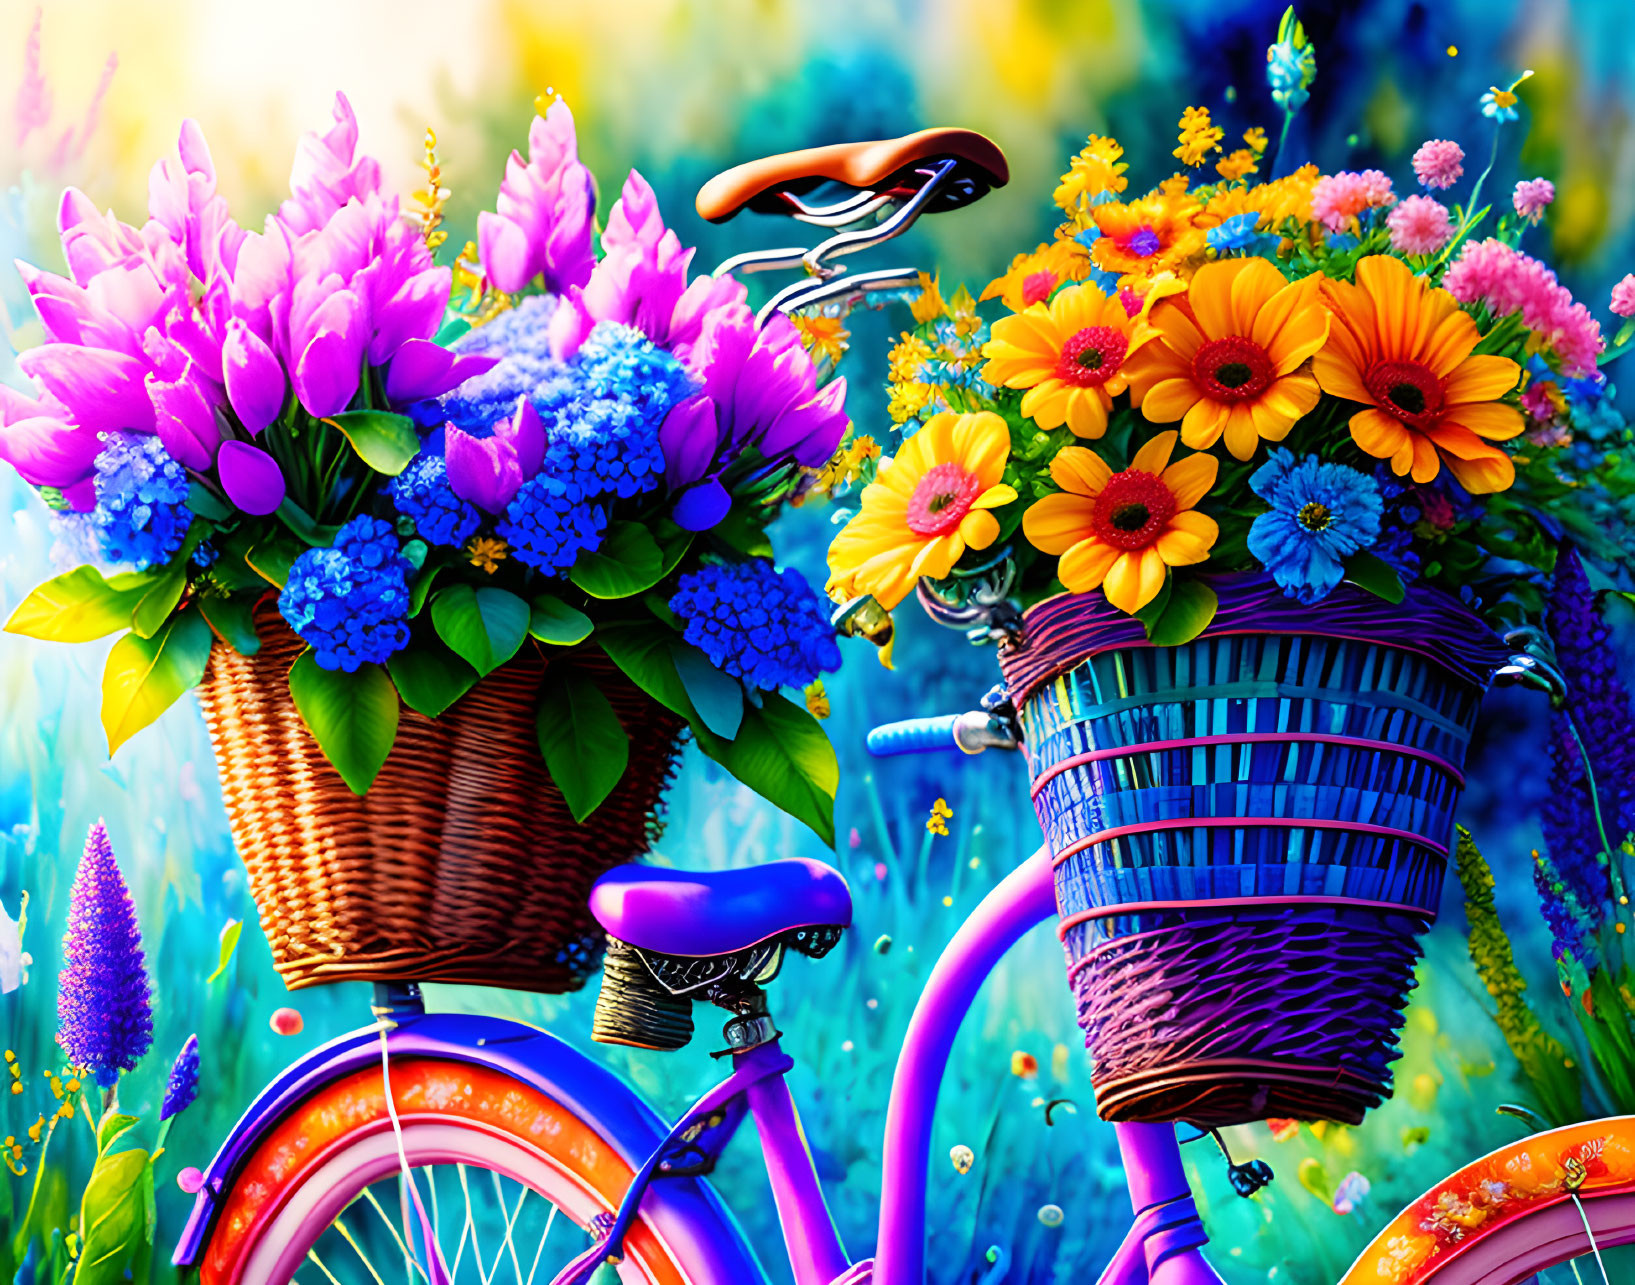 bike with flowerbaskets